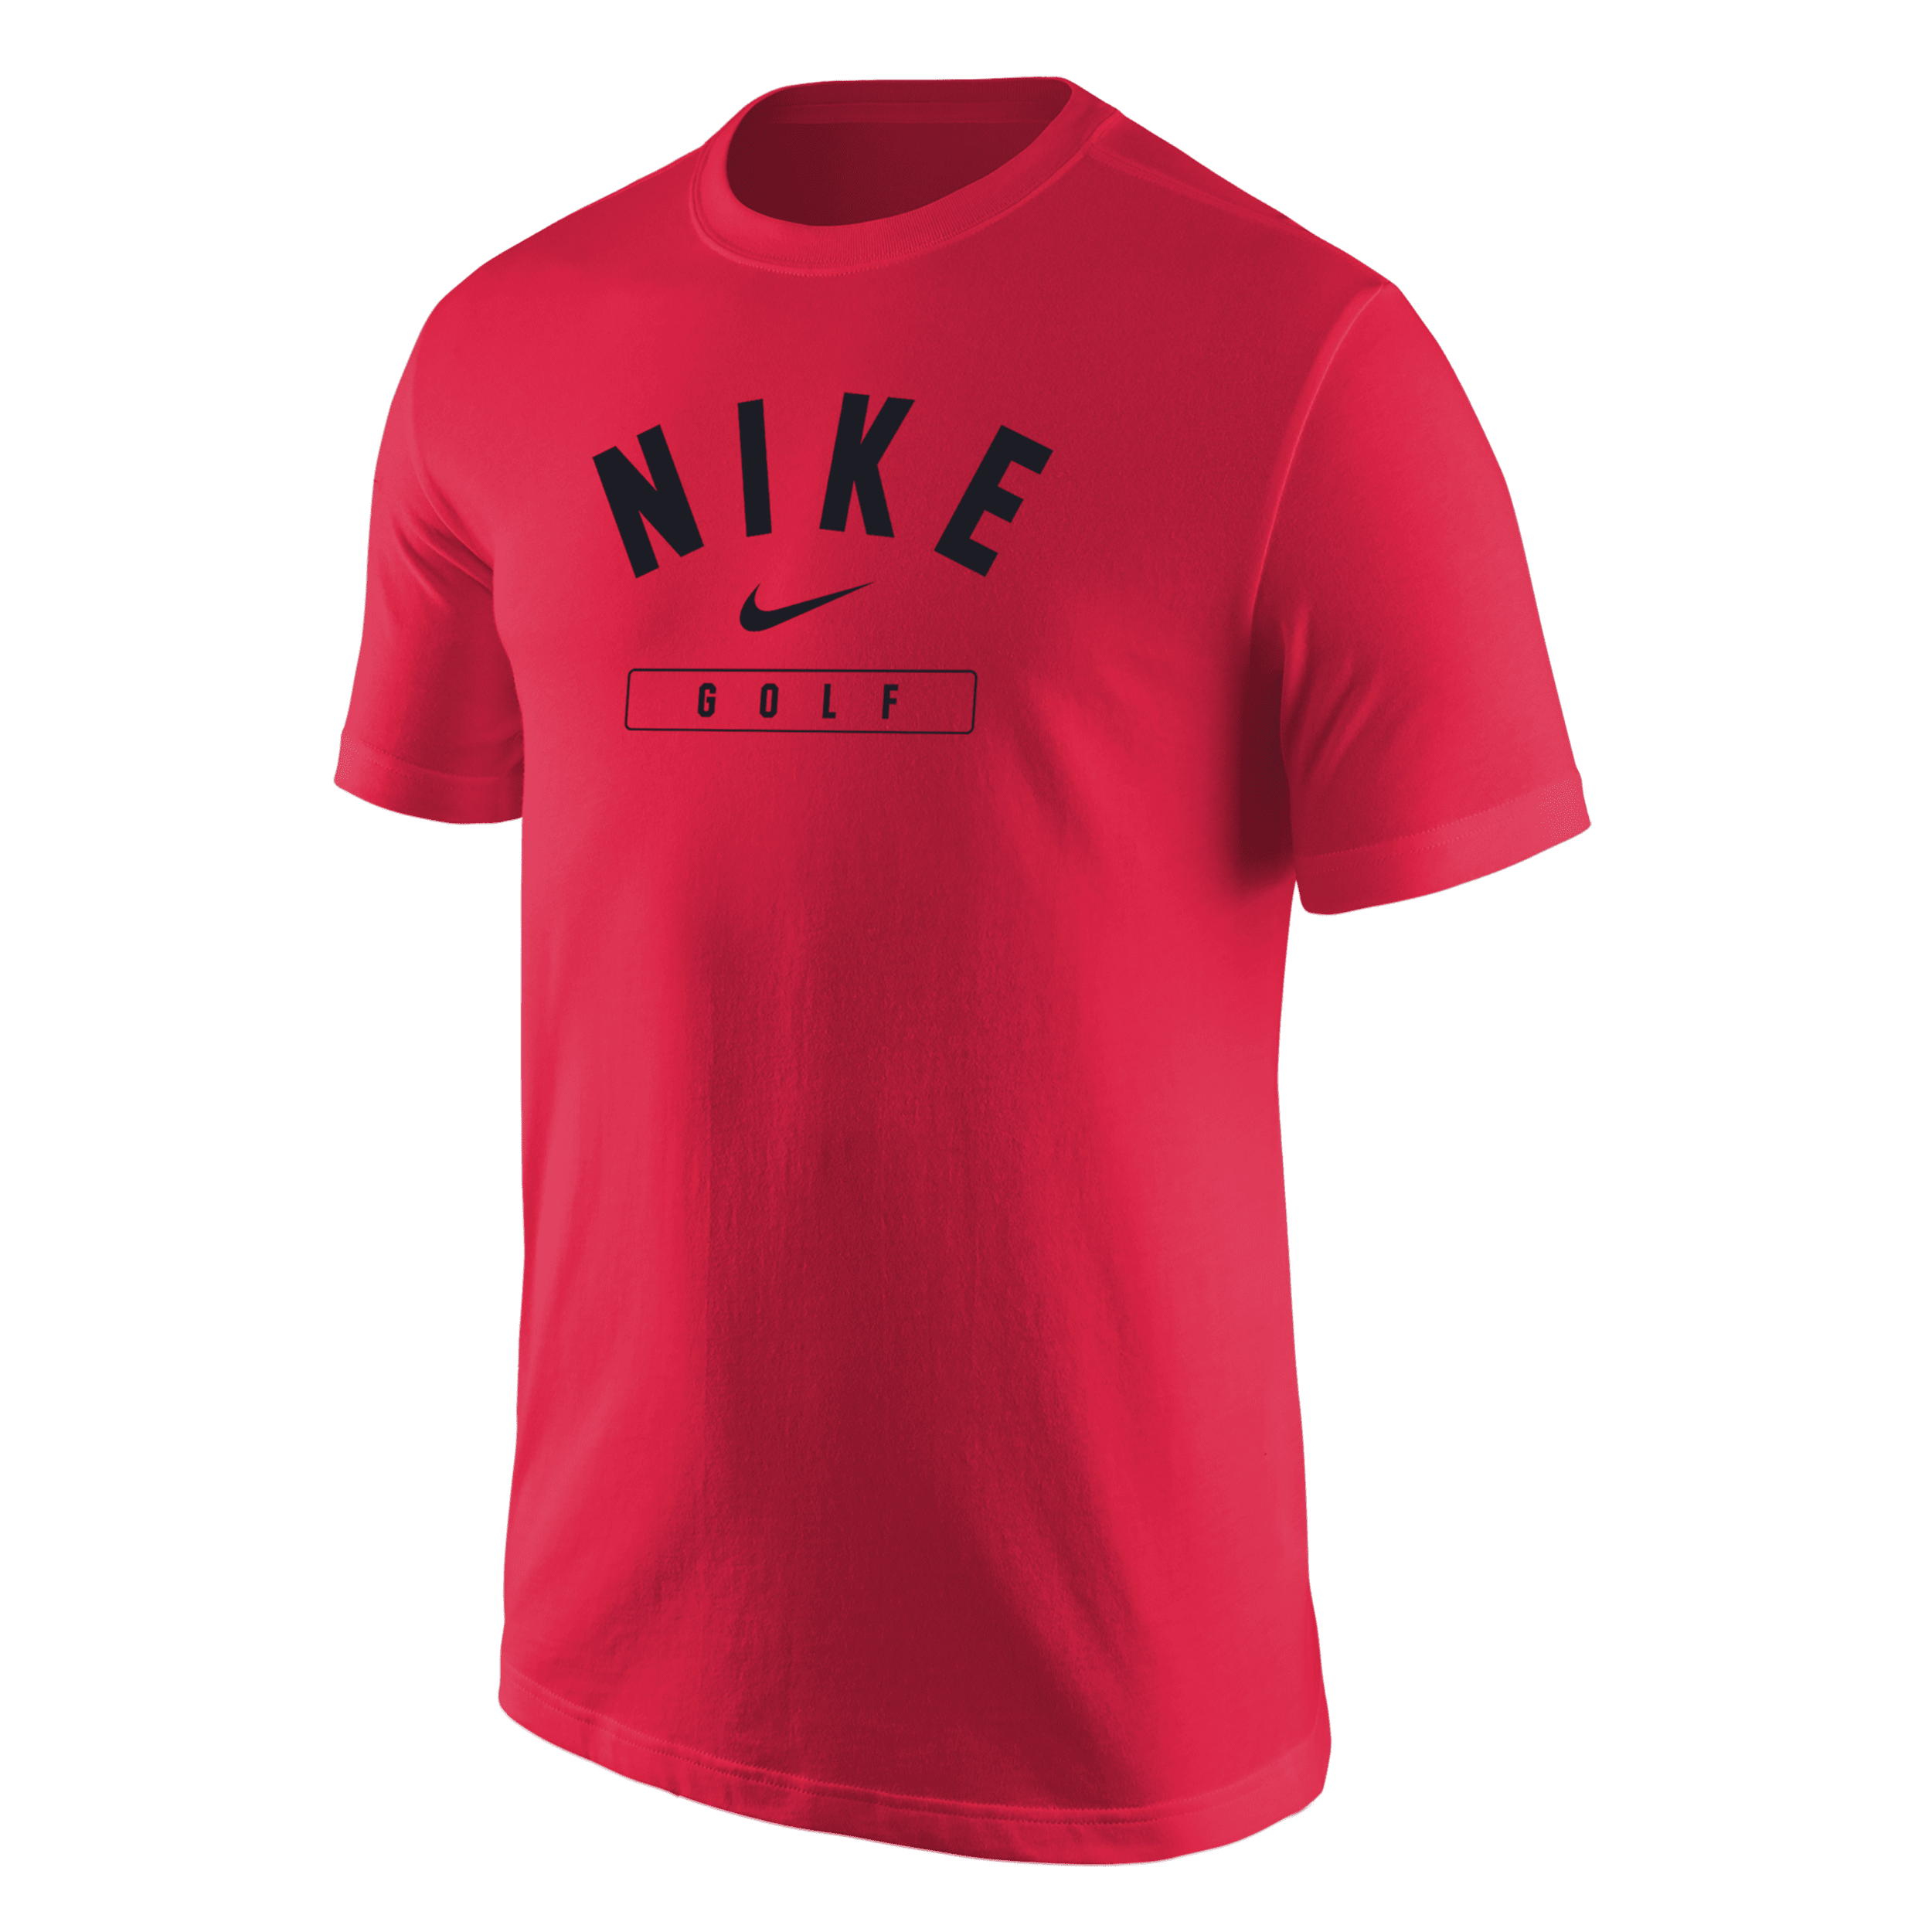 Nike Men's Golf T-shirt In Red